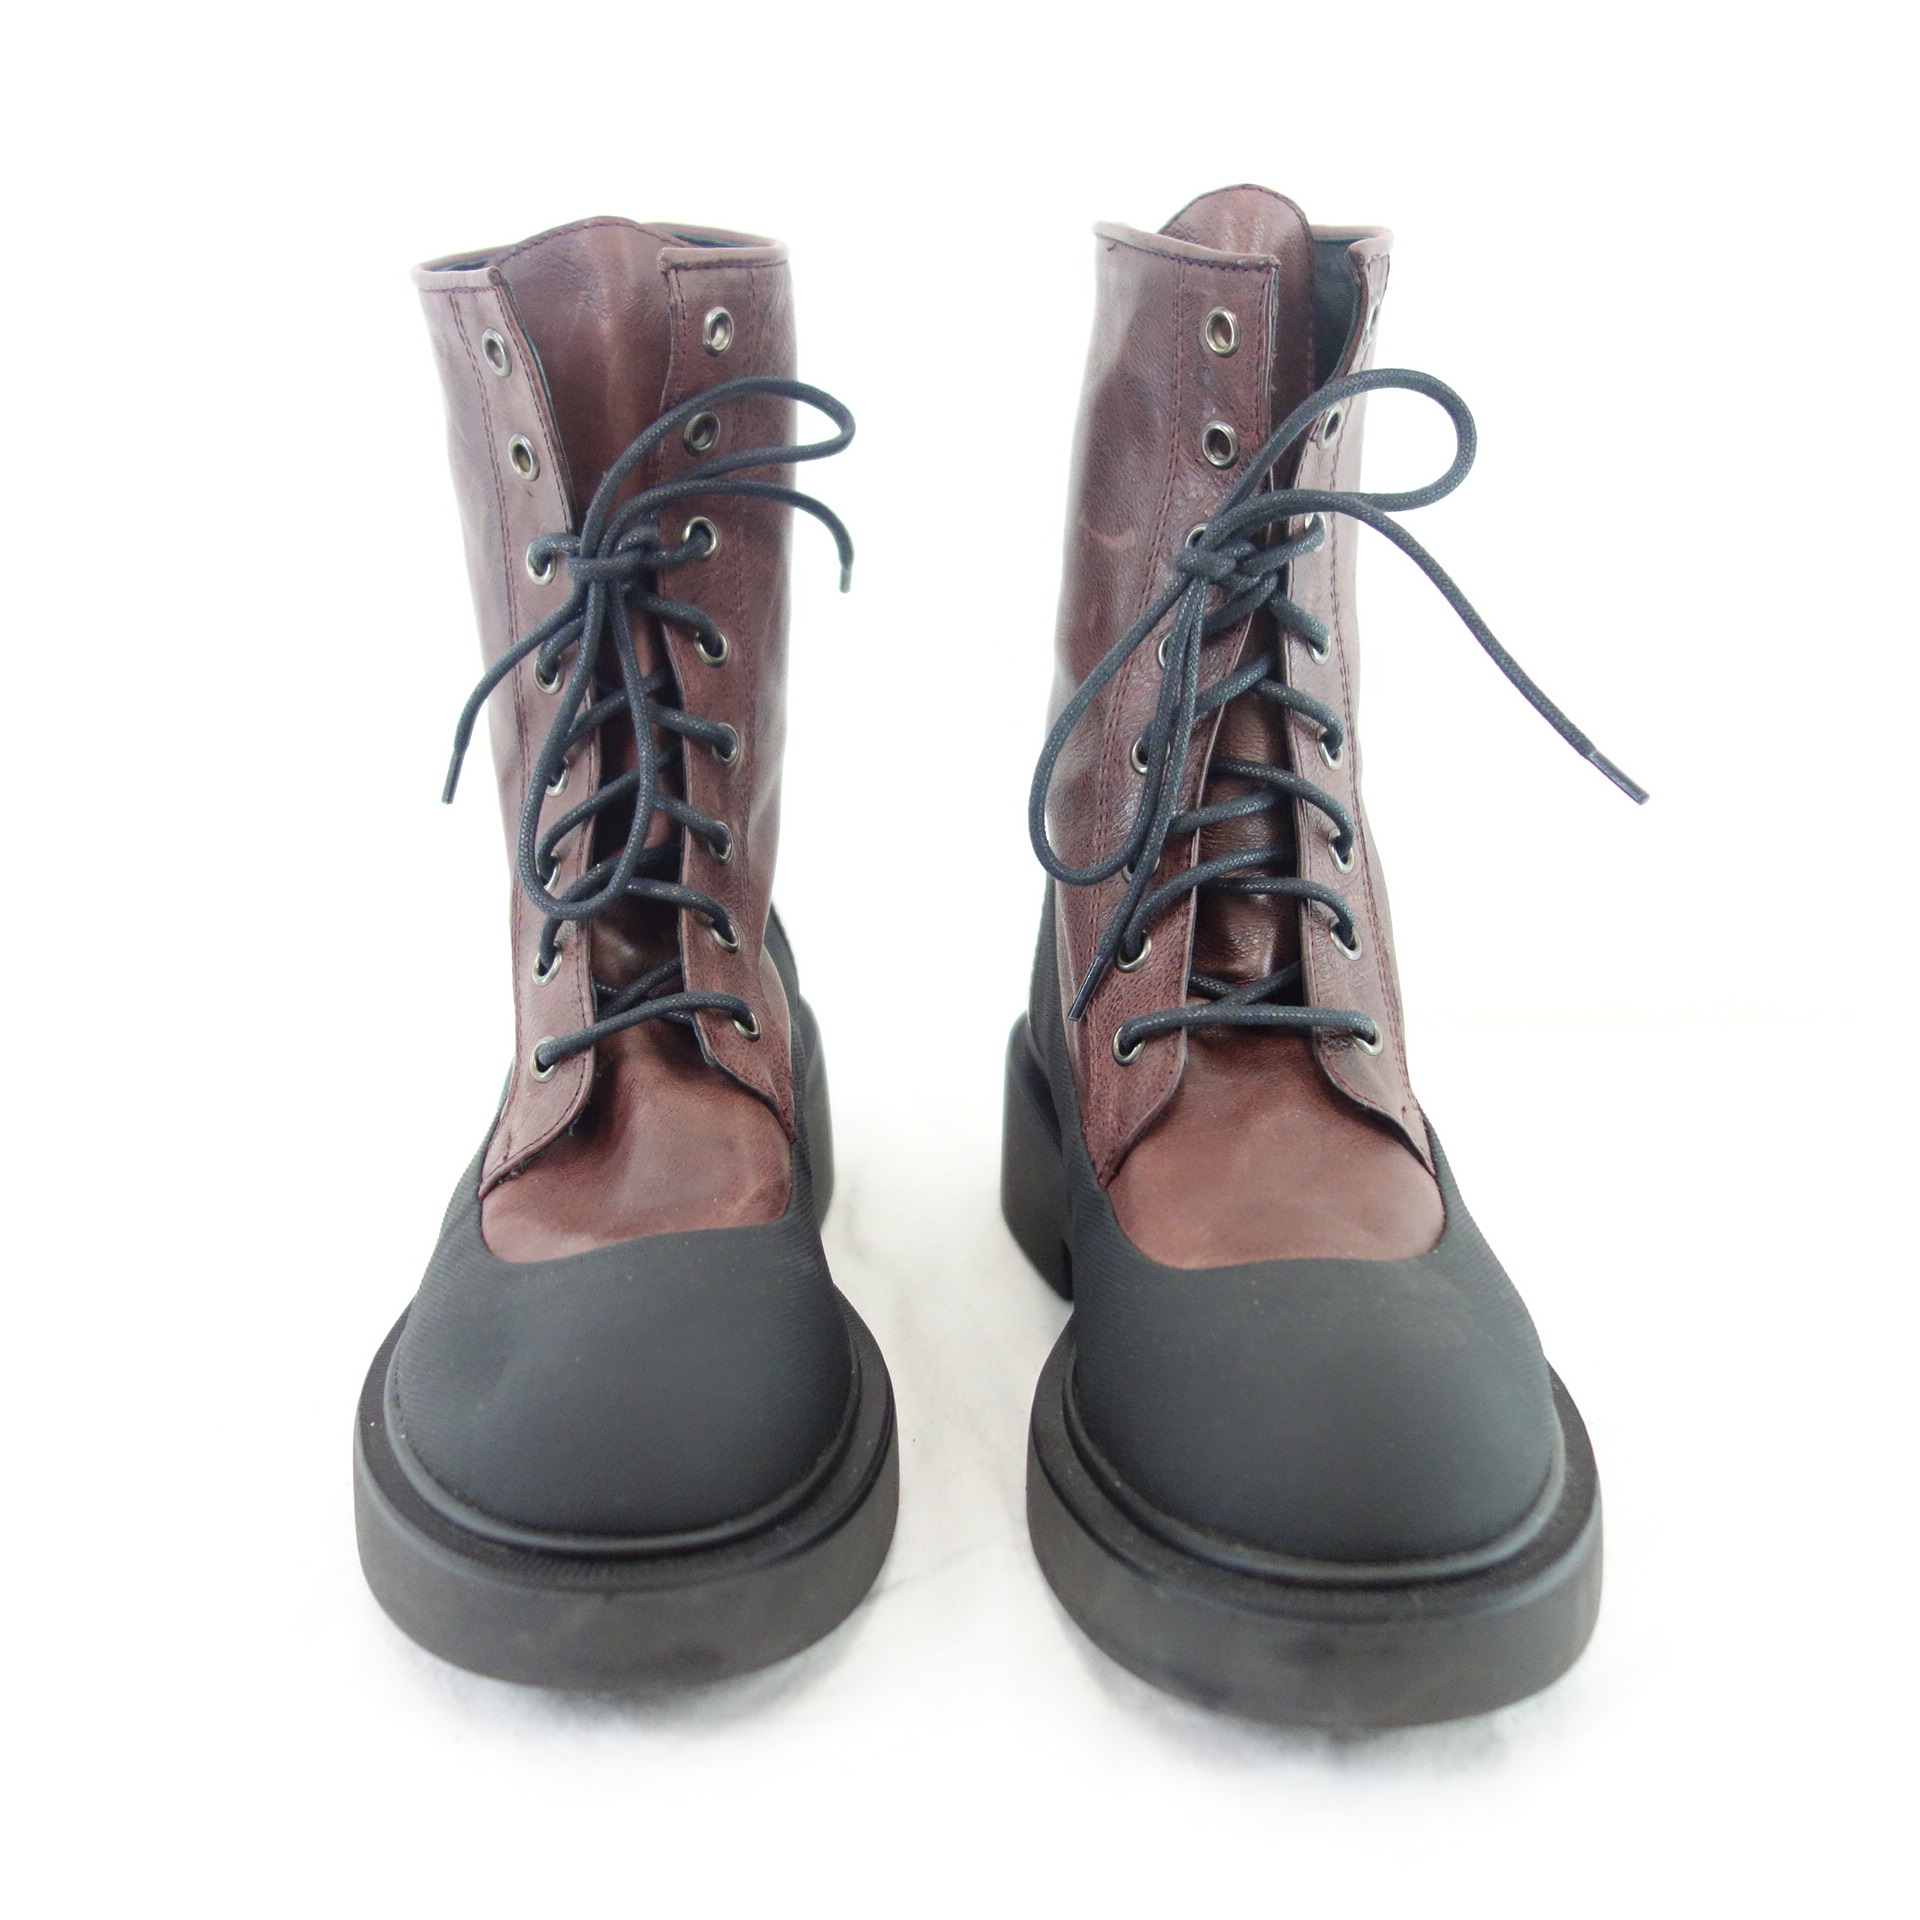 BUKELA Damen Schuhe Halbschuhe Boots Stiefeletten Leder Bordeaux Rot Gr 37